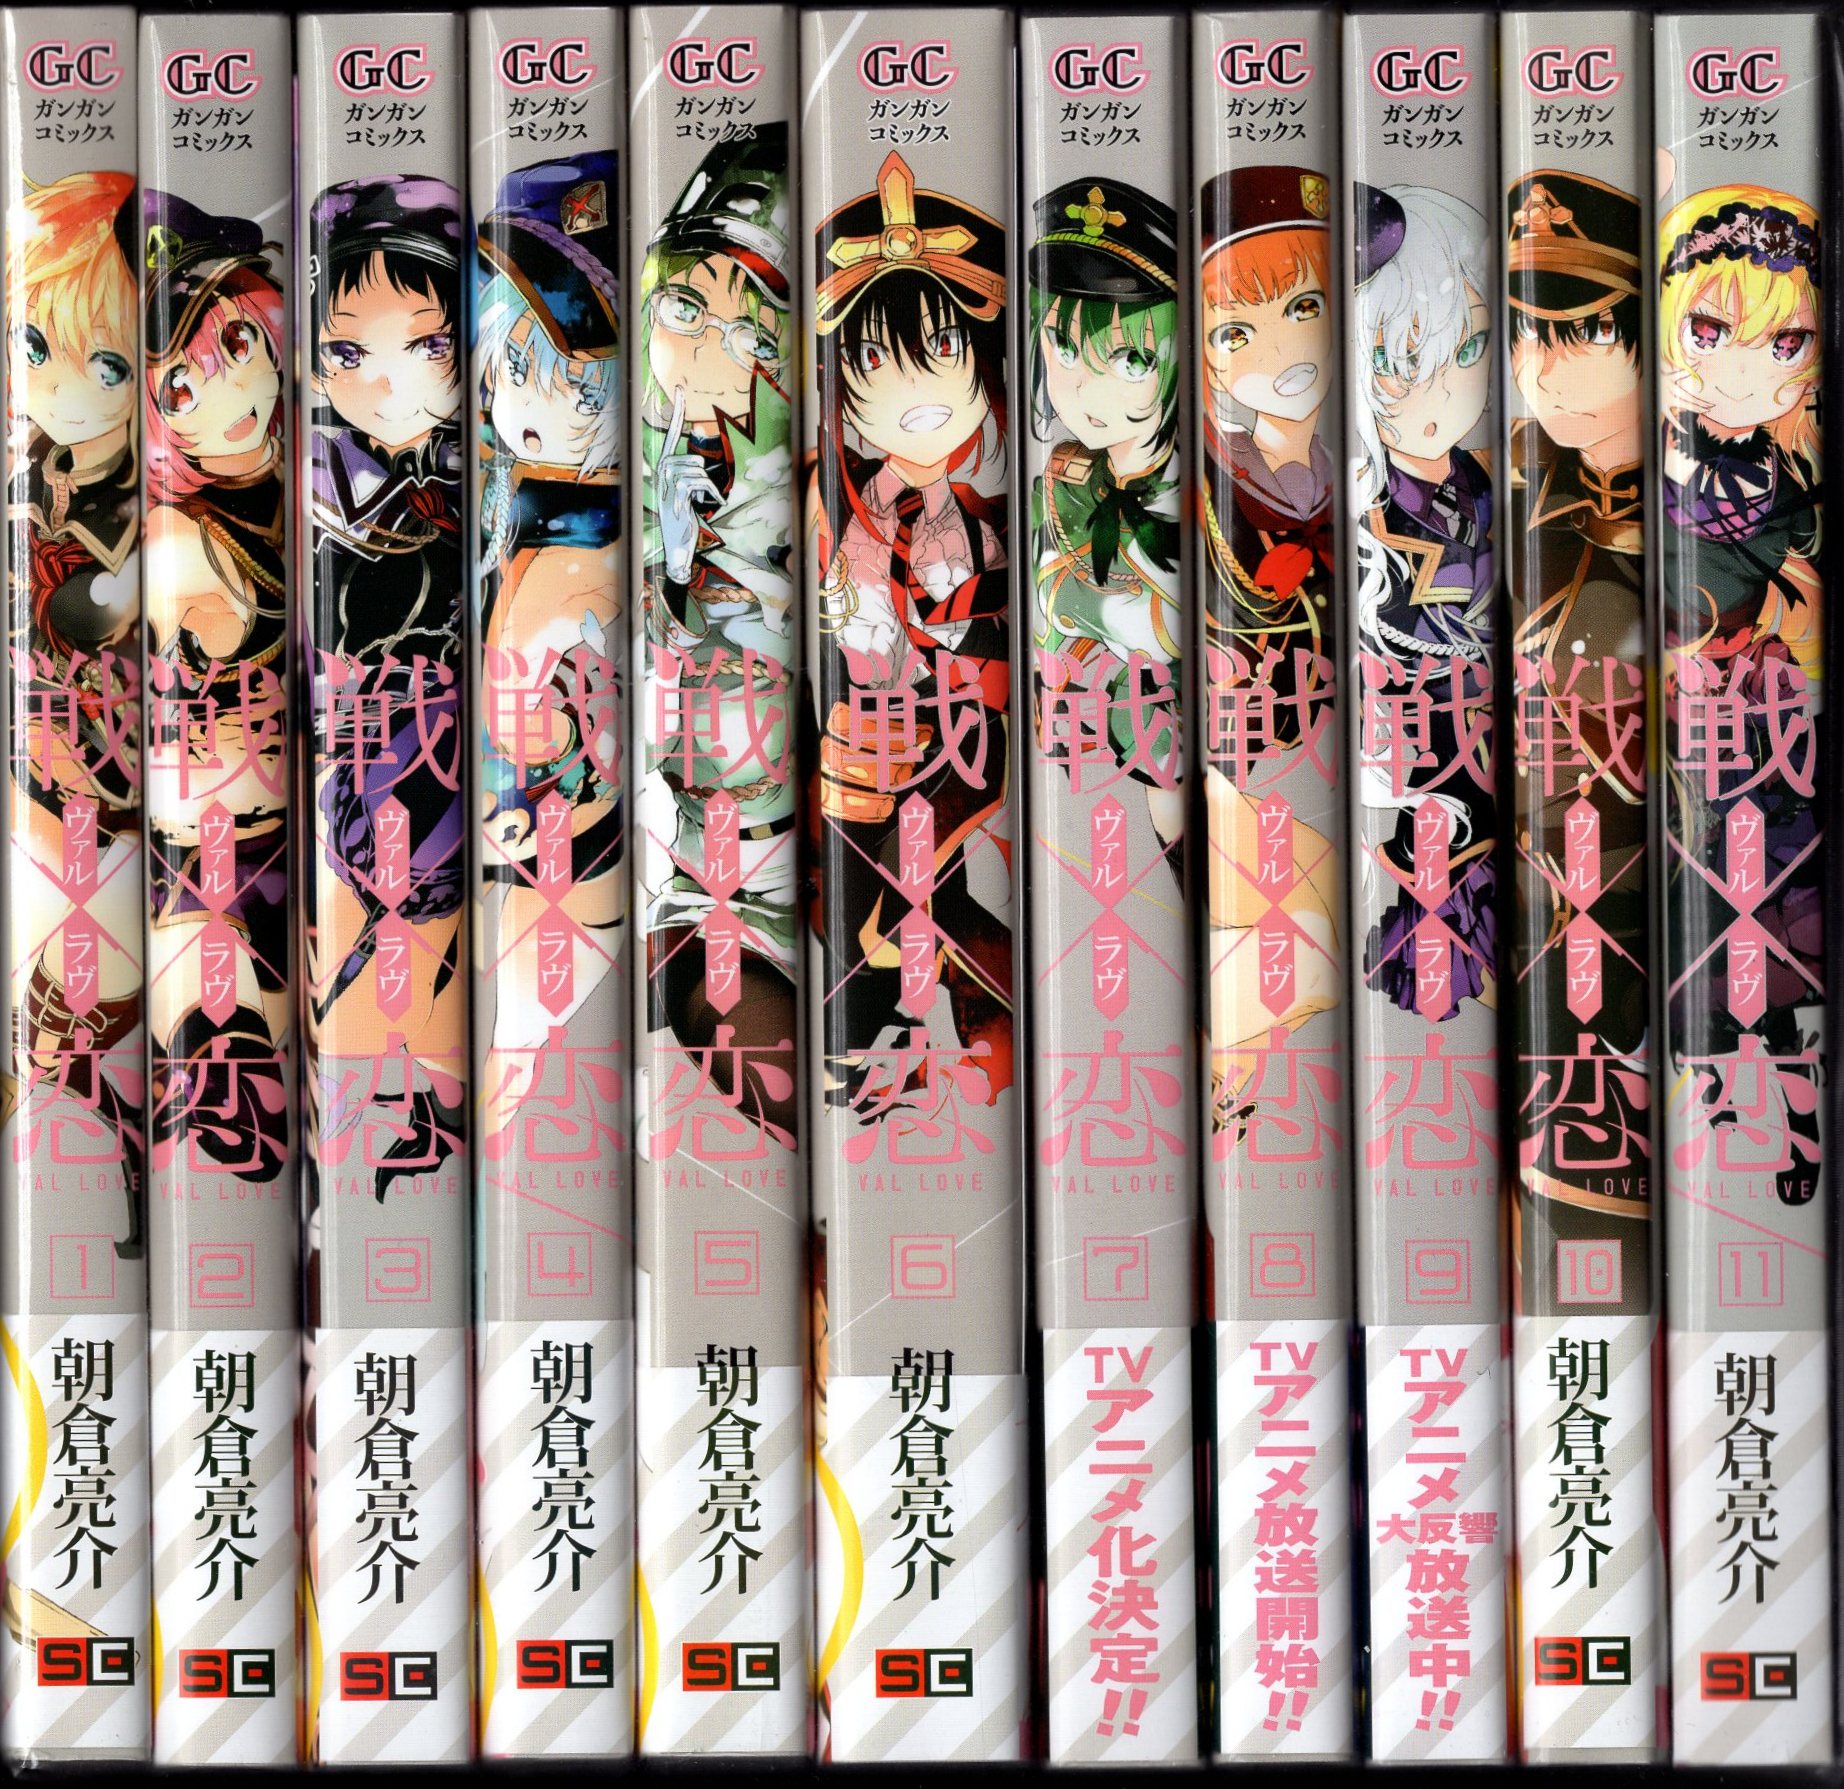 Val X Love Manga Volume 7